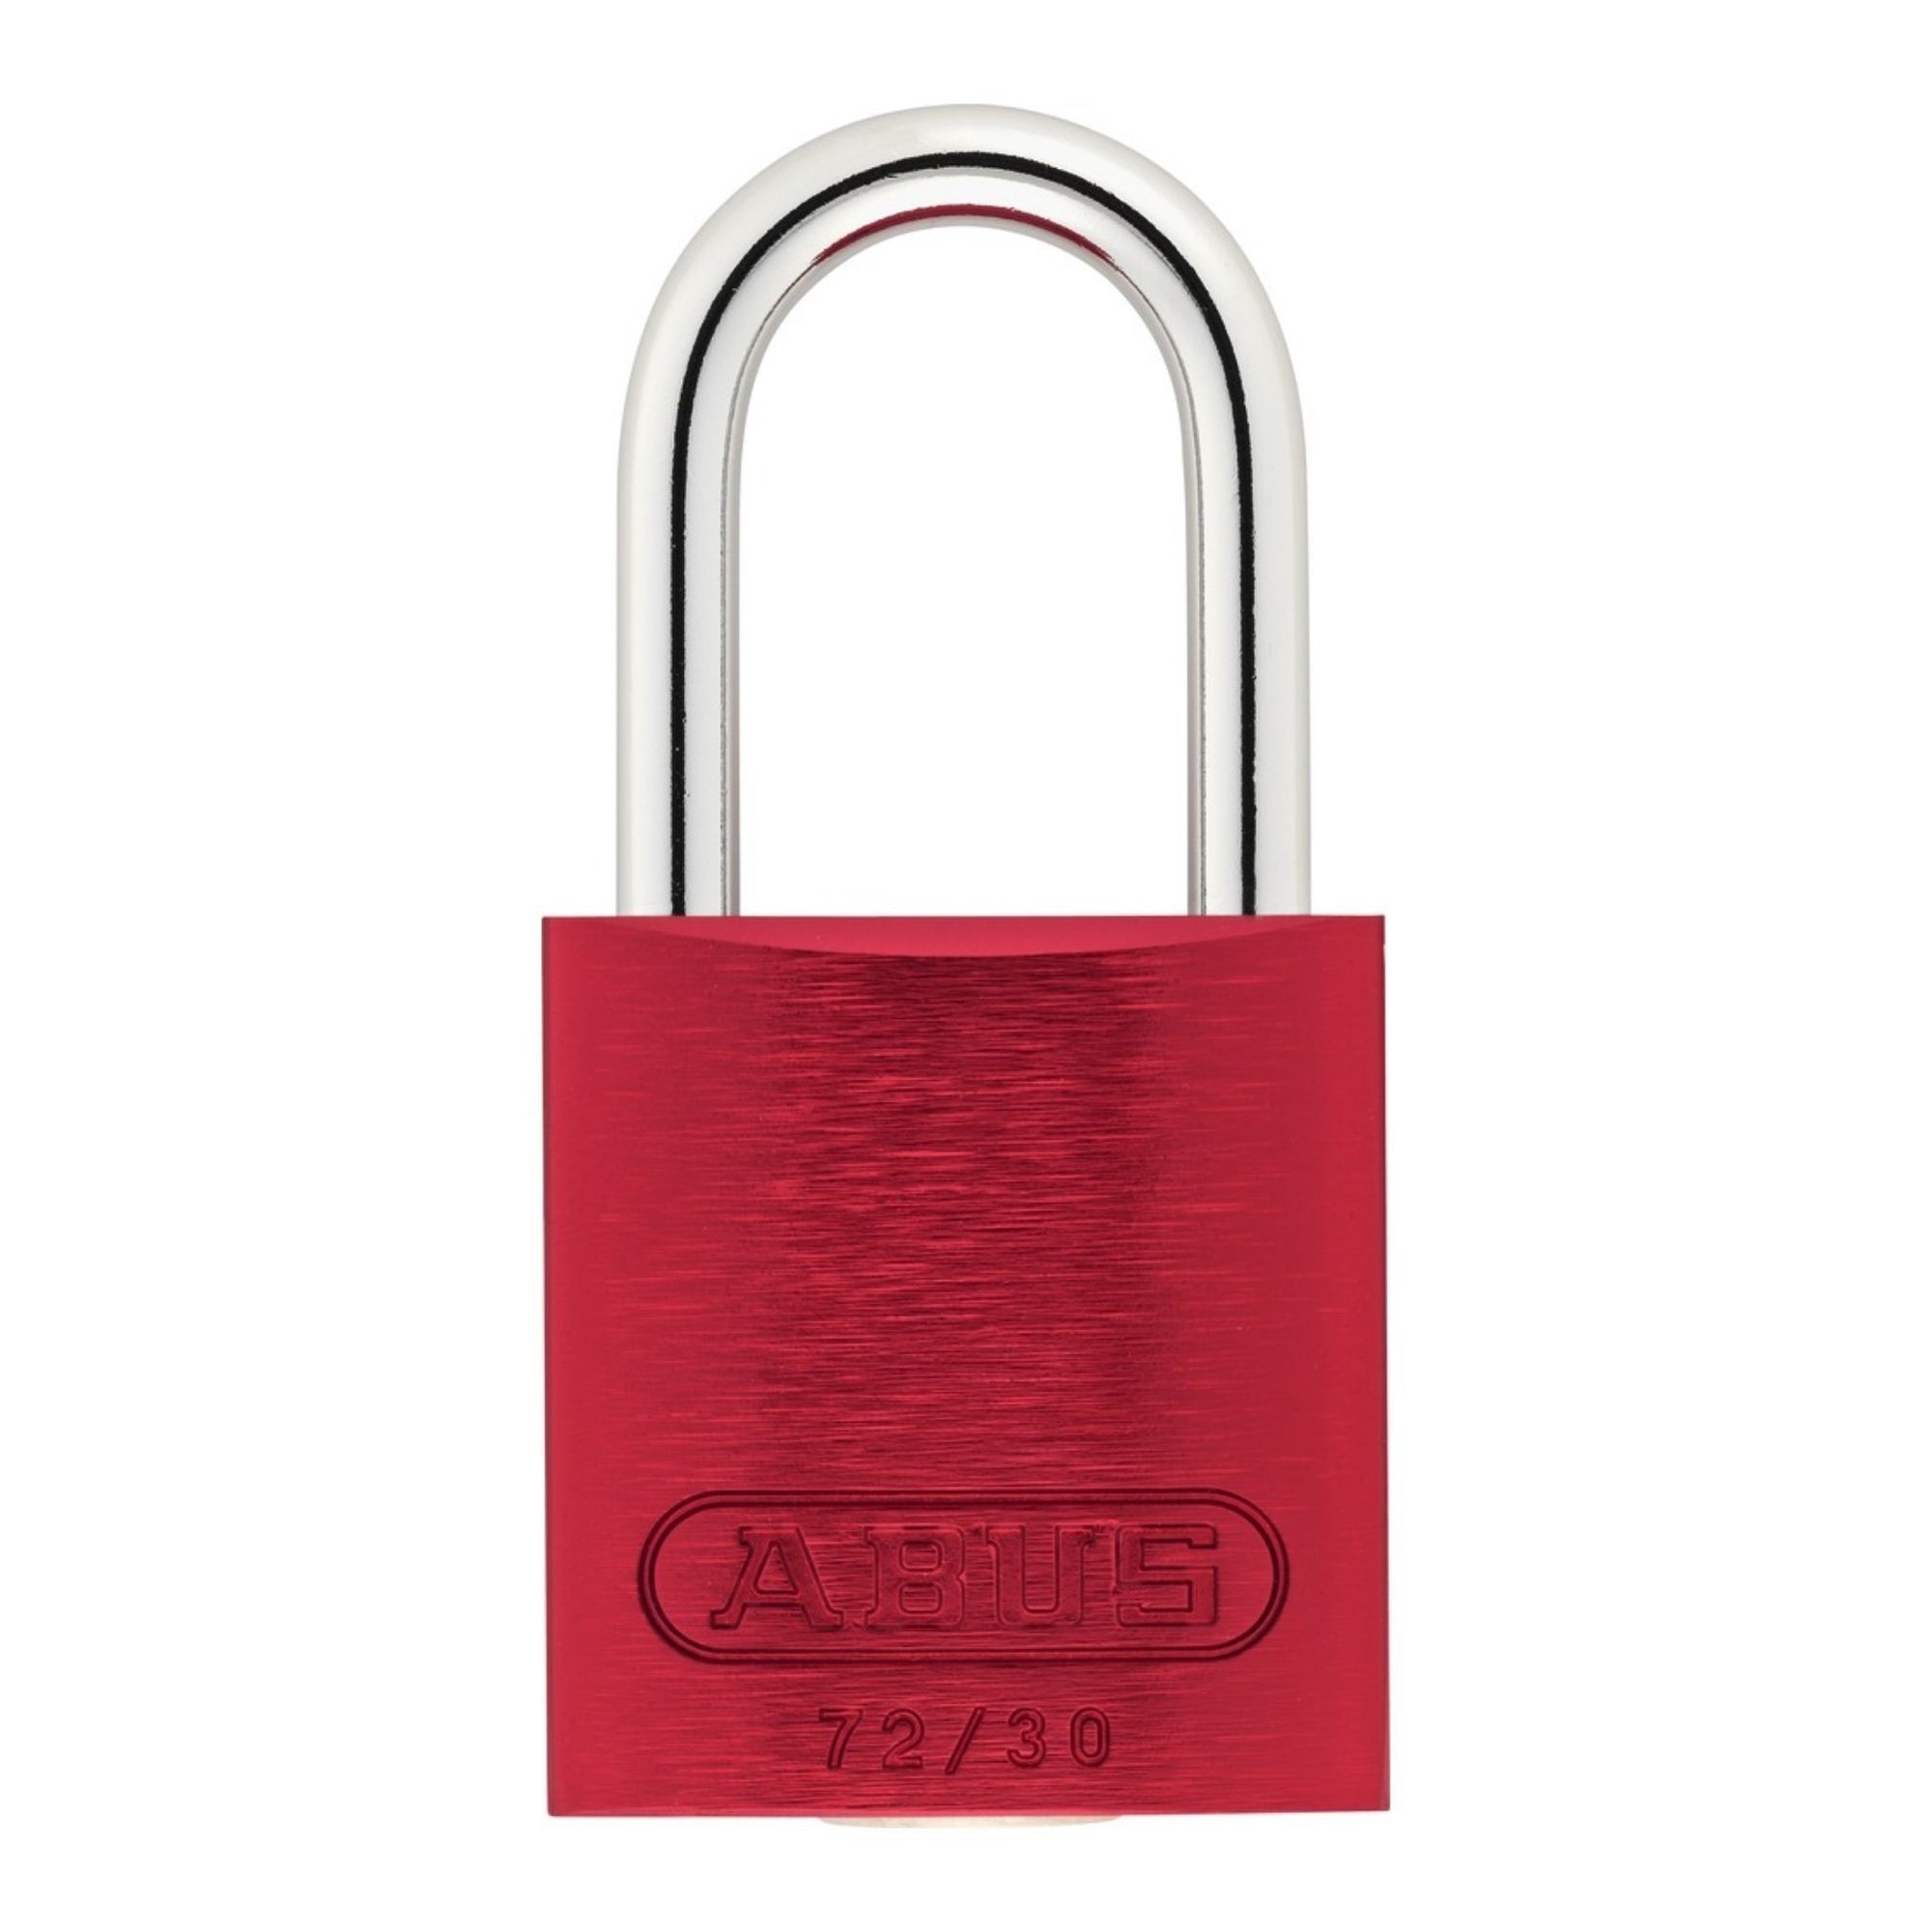 Abus 72/30 MK Red Aluminum Safety Padlock Master Keyed Locks - The Lock Source